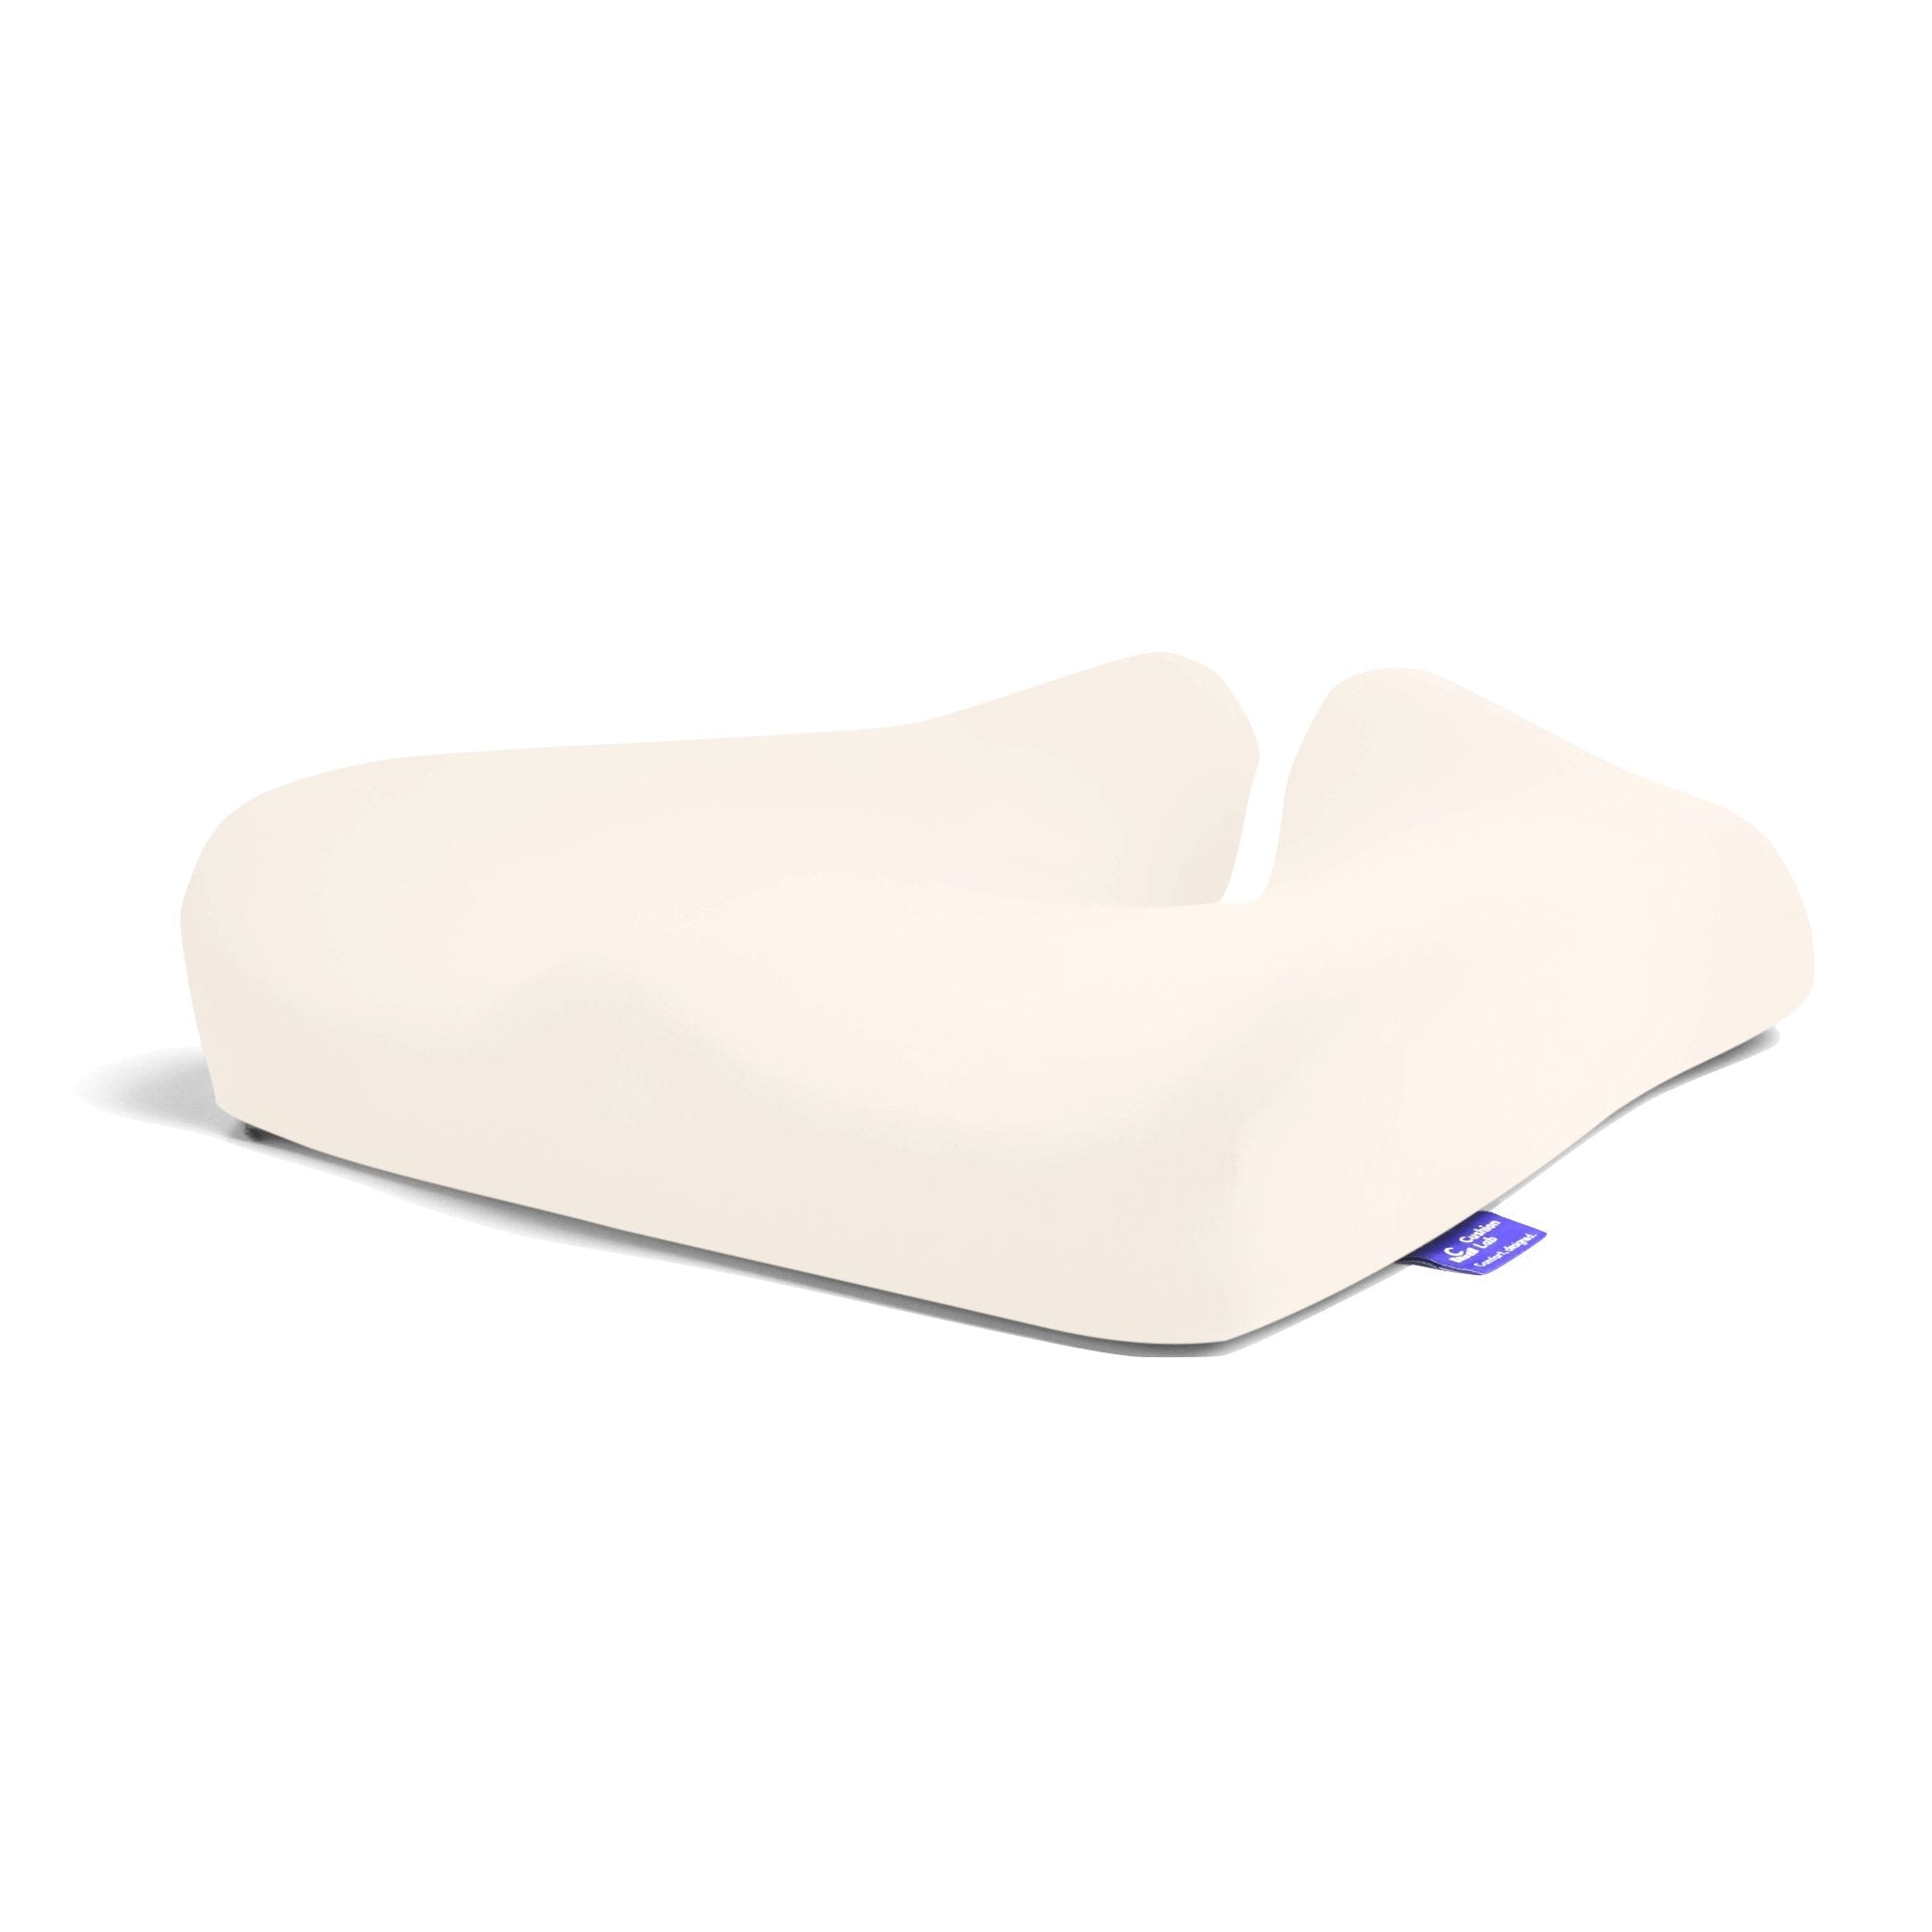 Adjustable Memory Foam Sit Bone Relief Seat Cushion – Orali